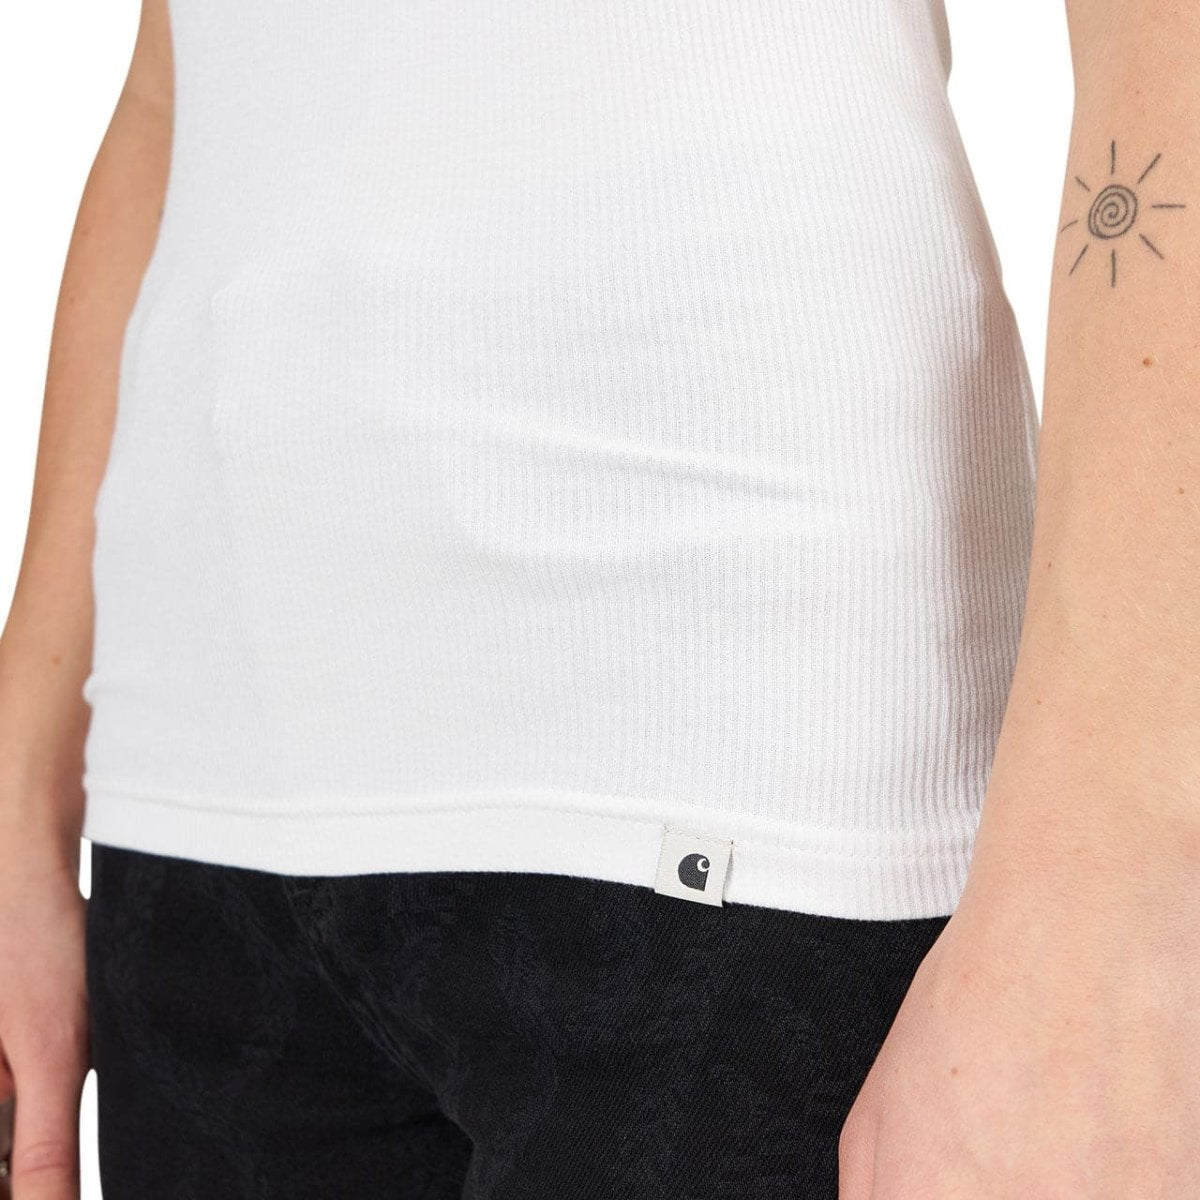 Carhartt WIP W Seri A-Shirt (Weiß)  - Allike Store